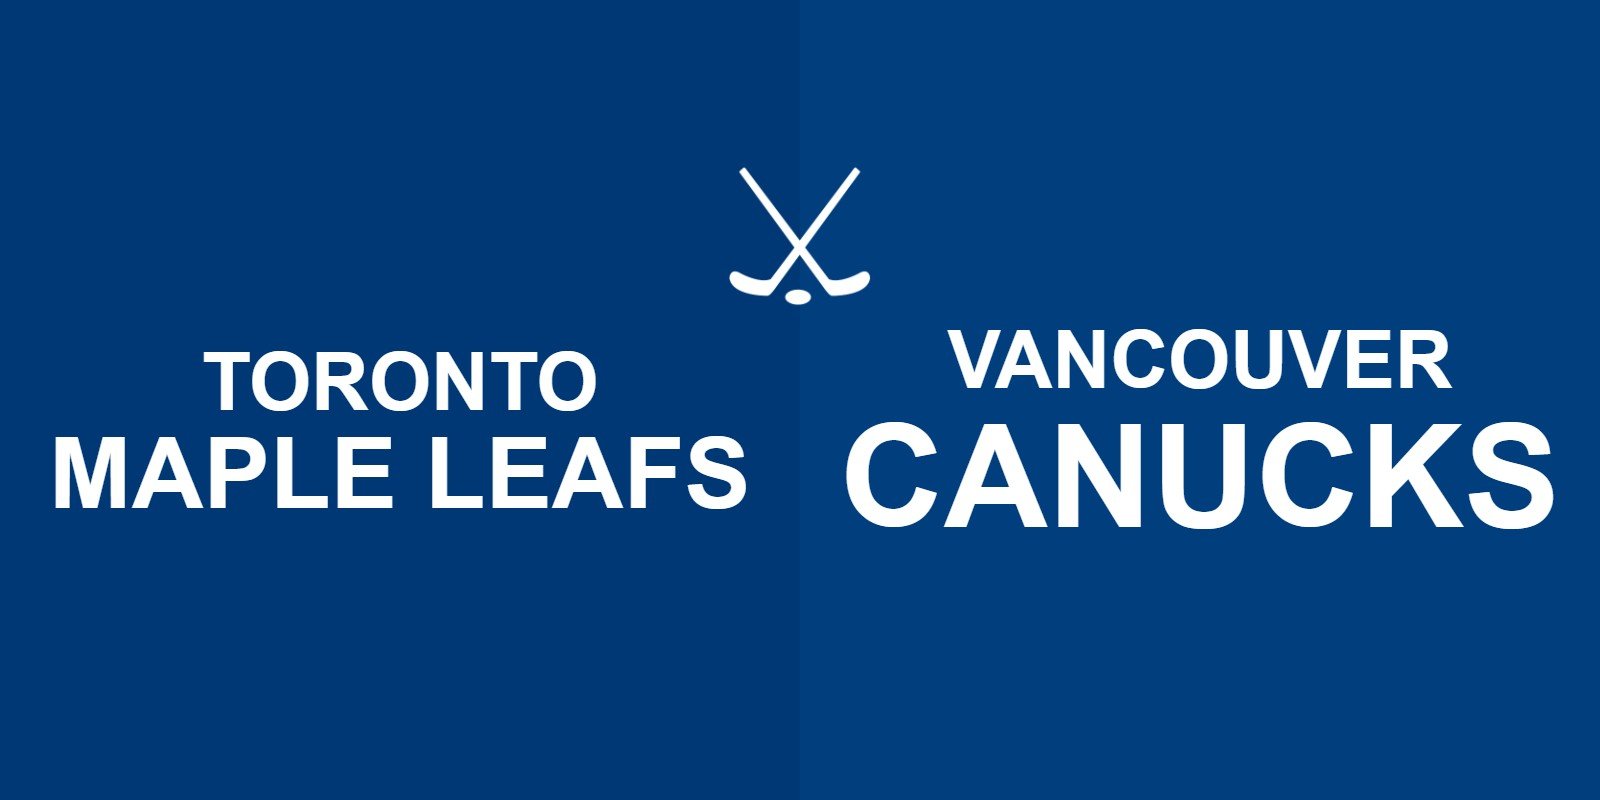 Maple Leafs vs Canucks